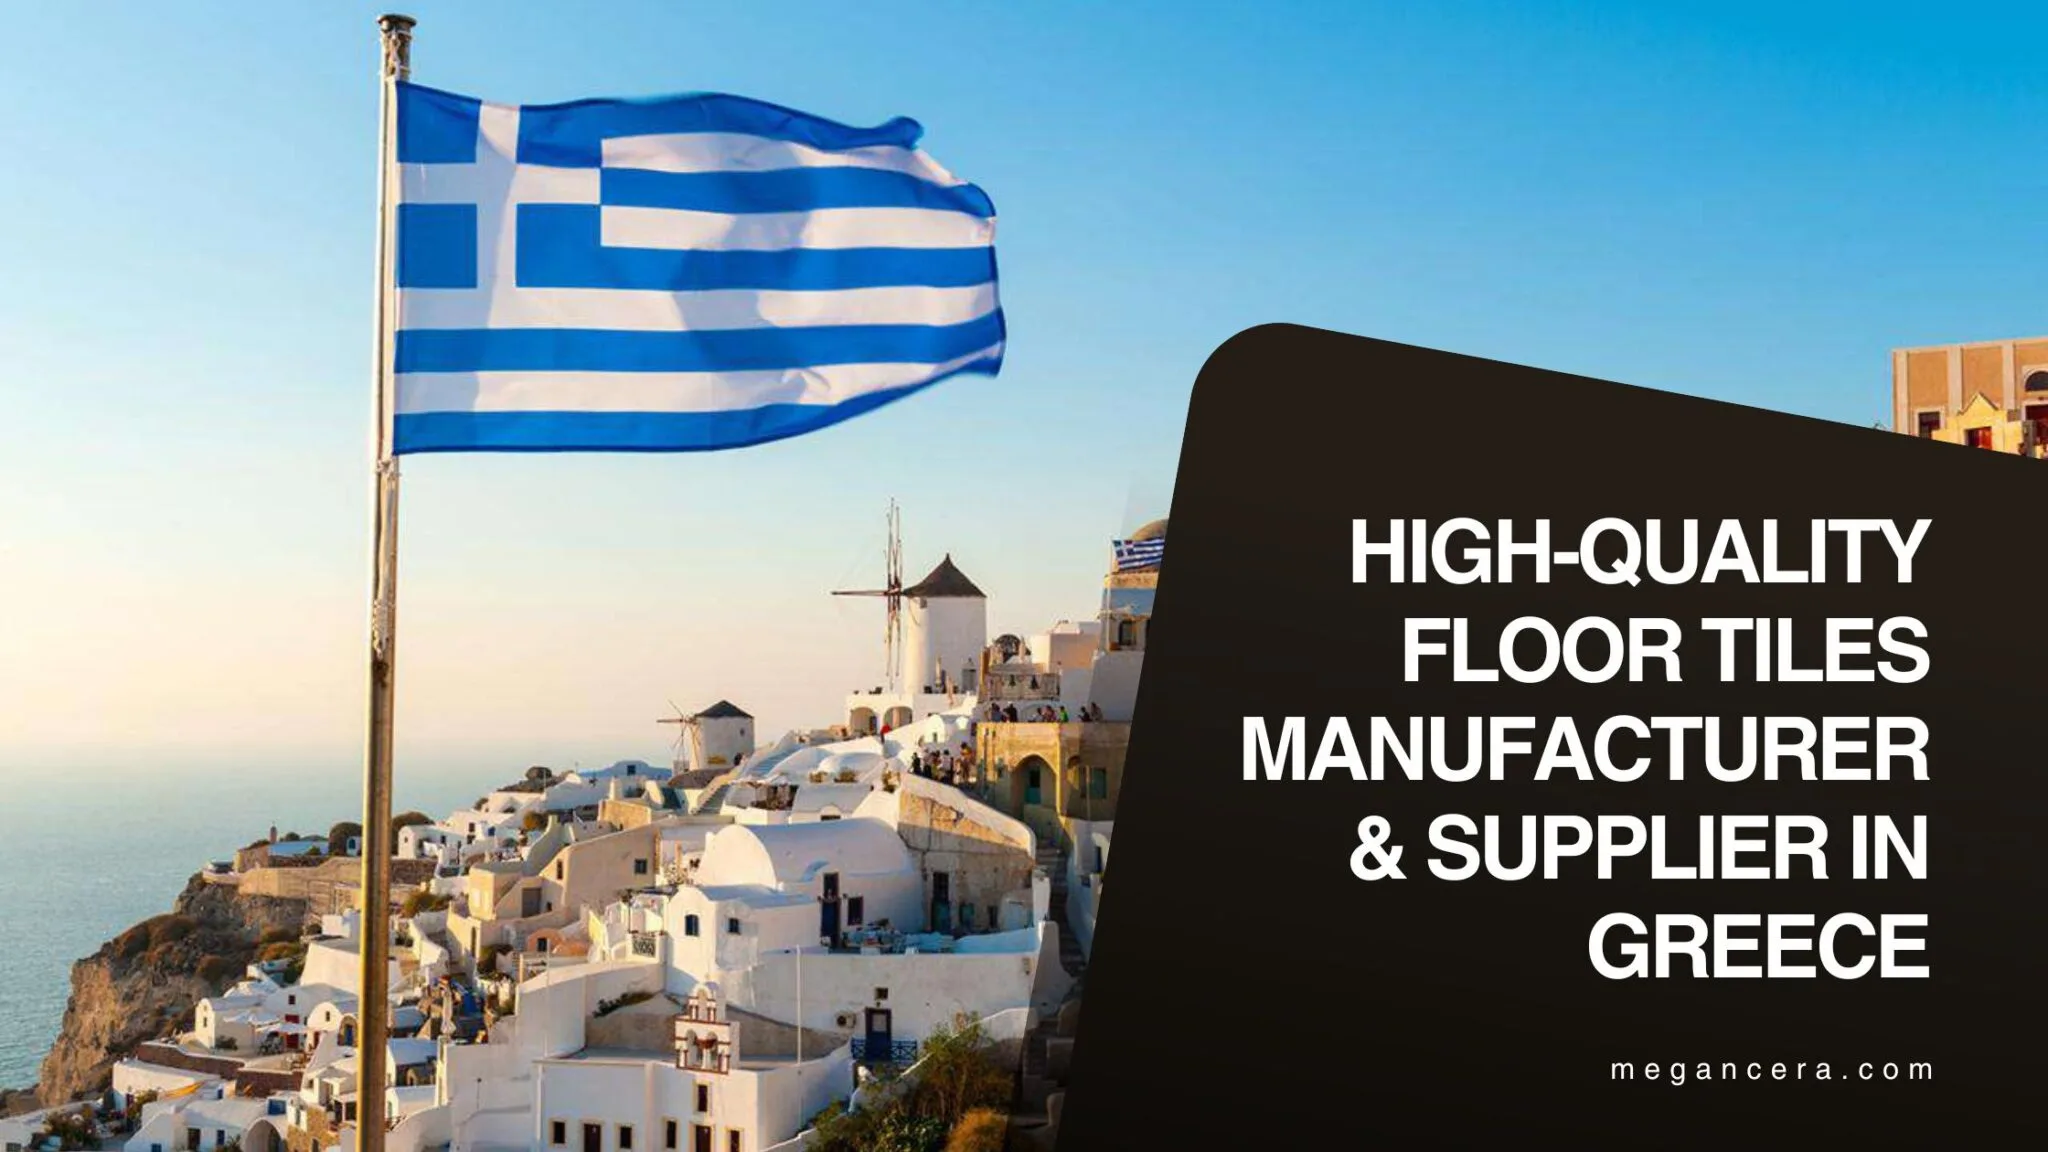 High-Quality Floor Tiles Manufacturer & Supplier in Greece